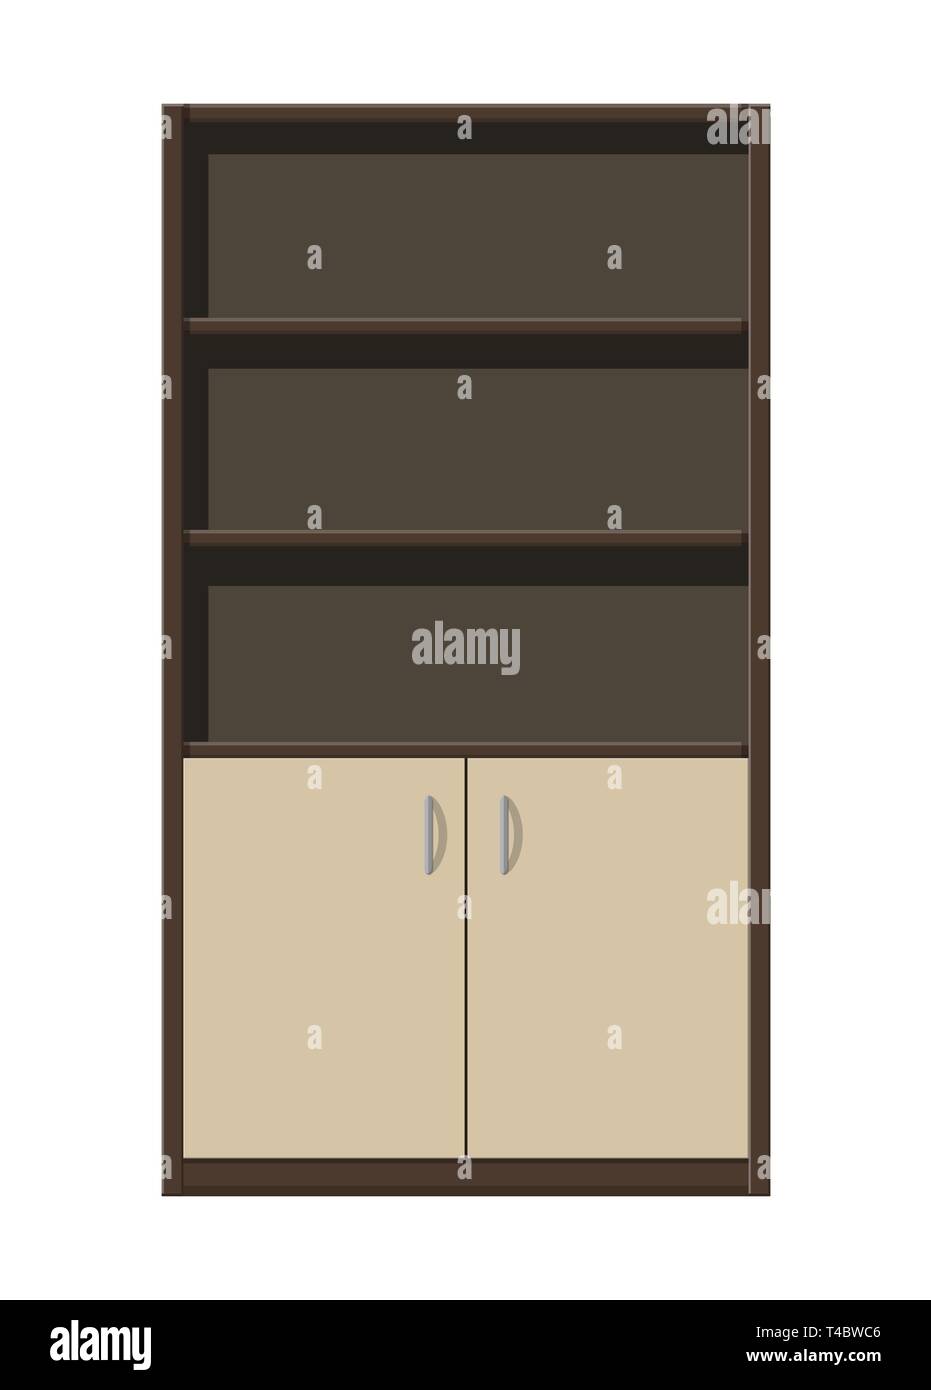 Empty Wooden Storage Shelves Room Furniture Cabinet With Doors